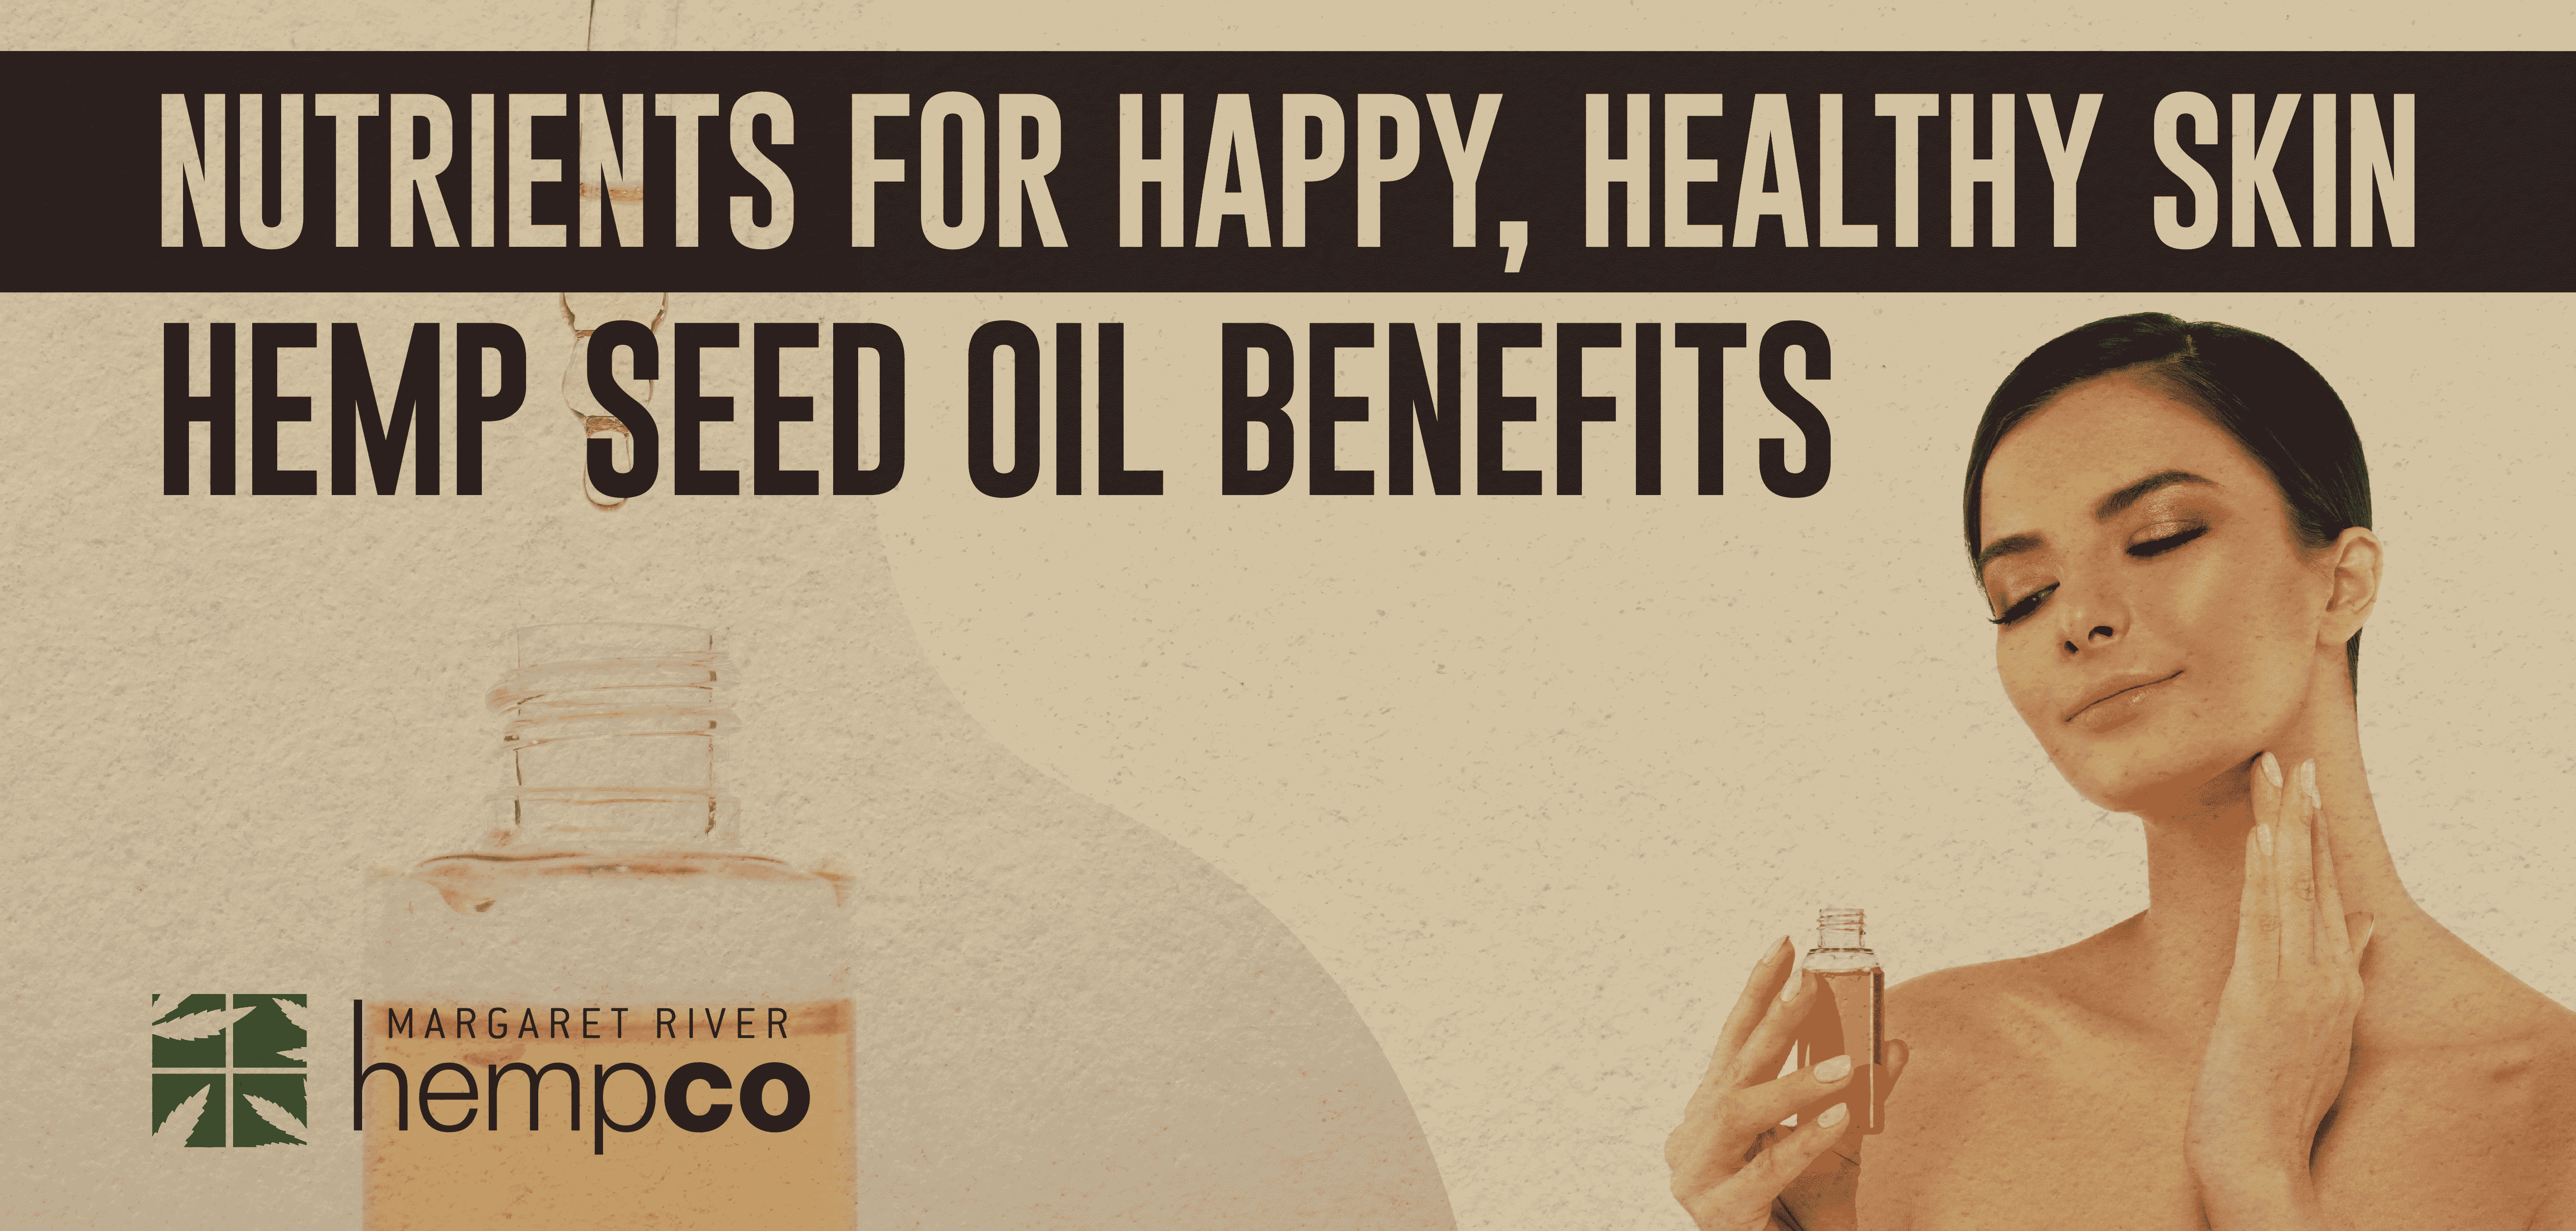 nutrients for happy, healthy skin - hemp seed oil benefits